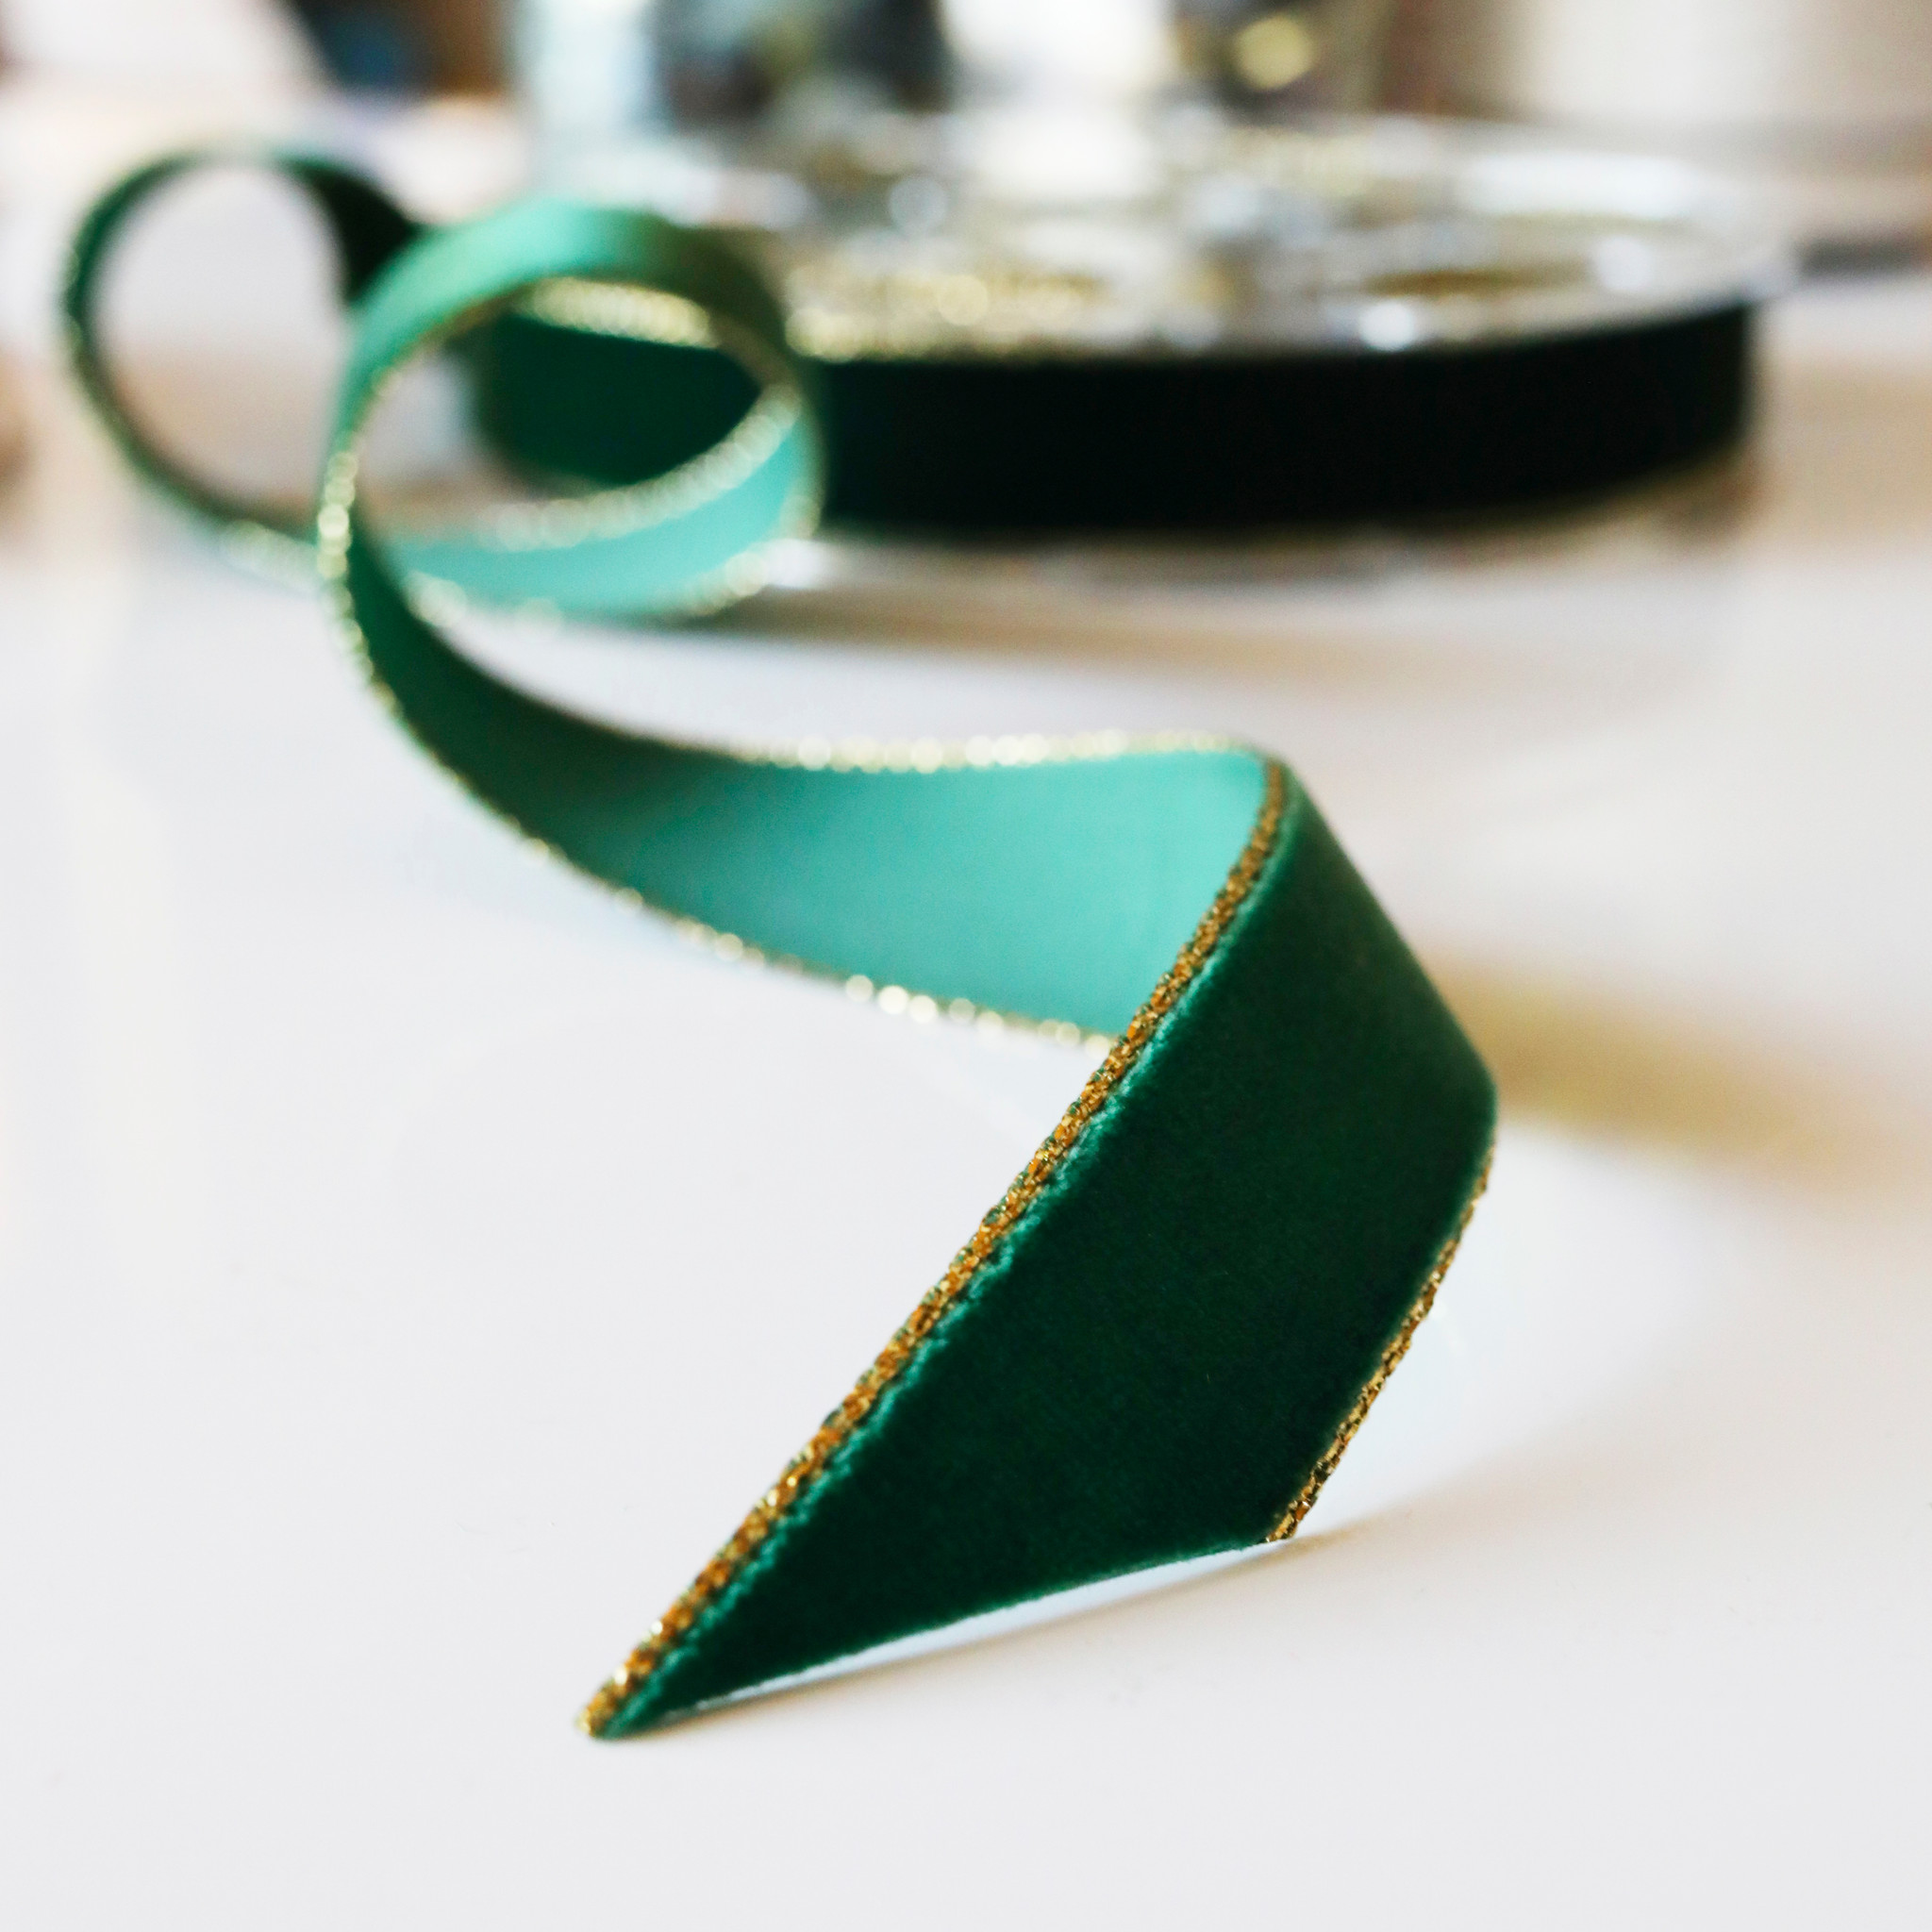 1/8 gold edge emerald green satin ribbon 5 knotted loop